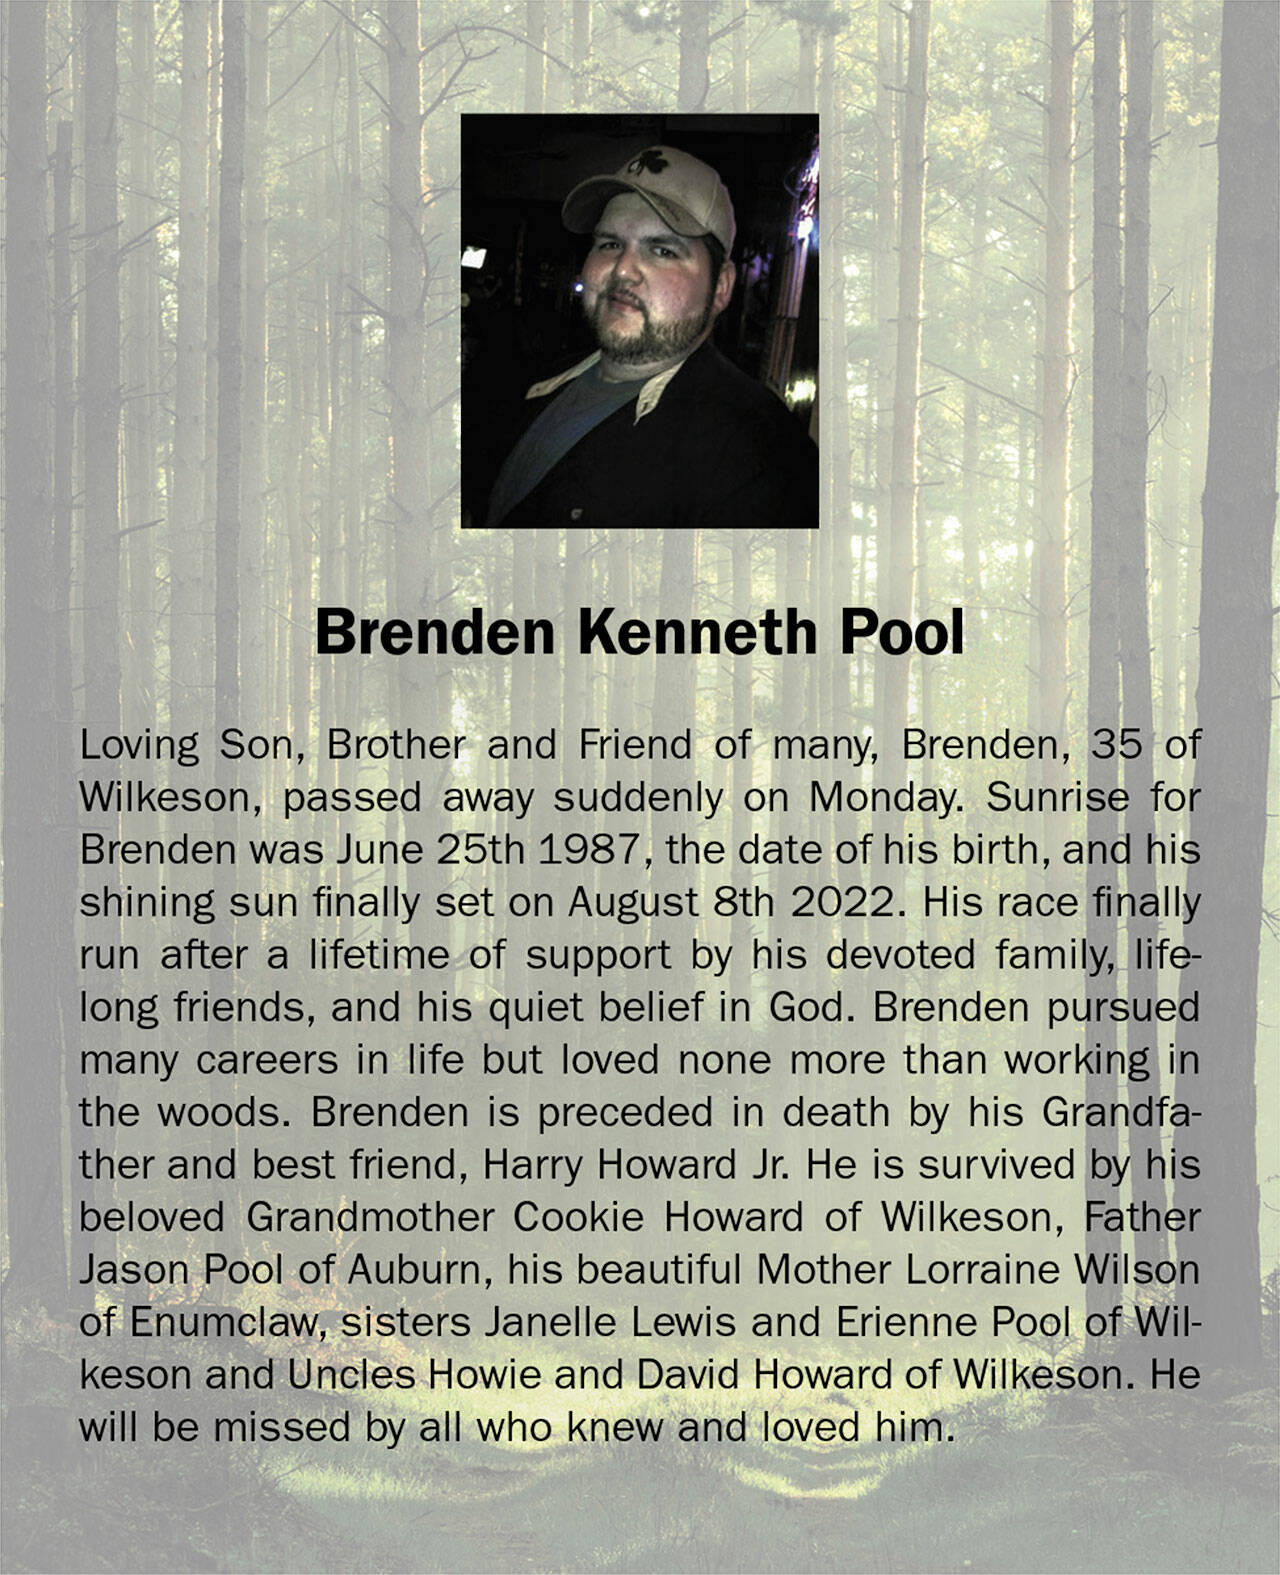 Brenden Kenneth Pool